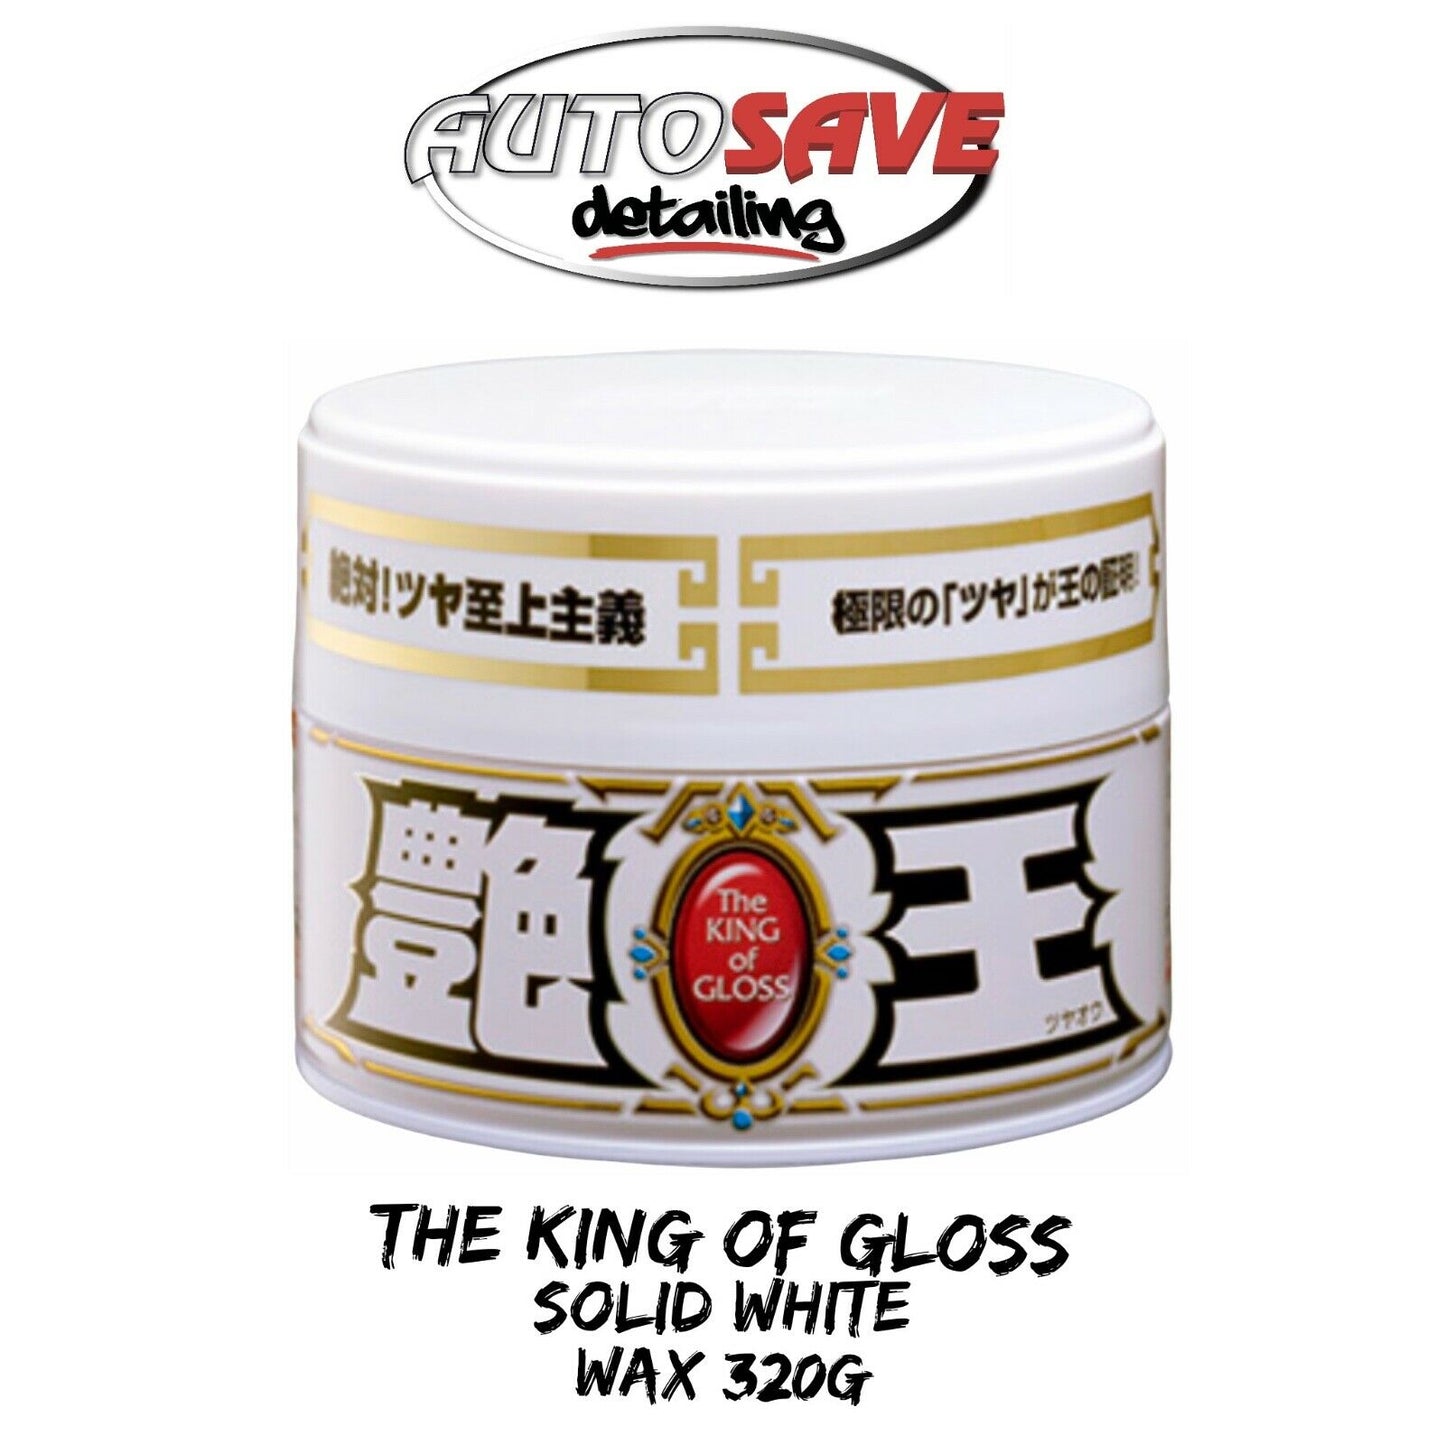 SOFT99 The King of Gloss White| Light Colours Premium Wax Coating UK STOCK